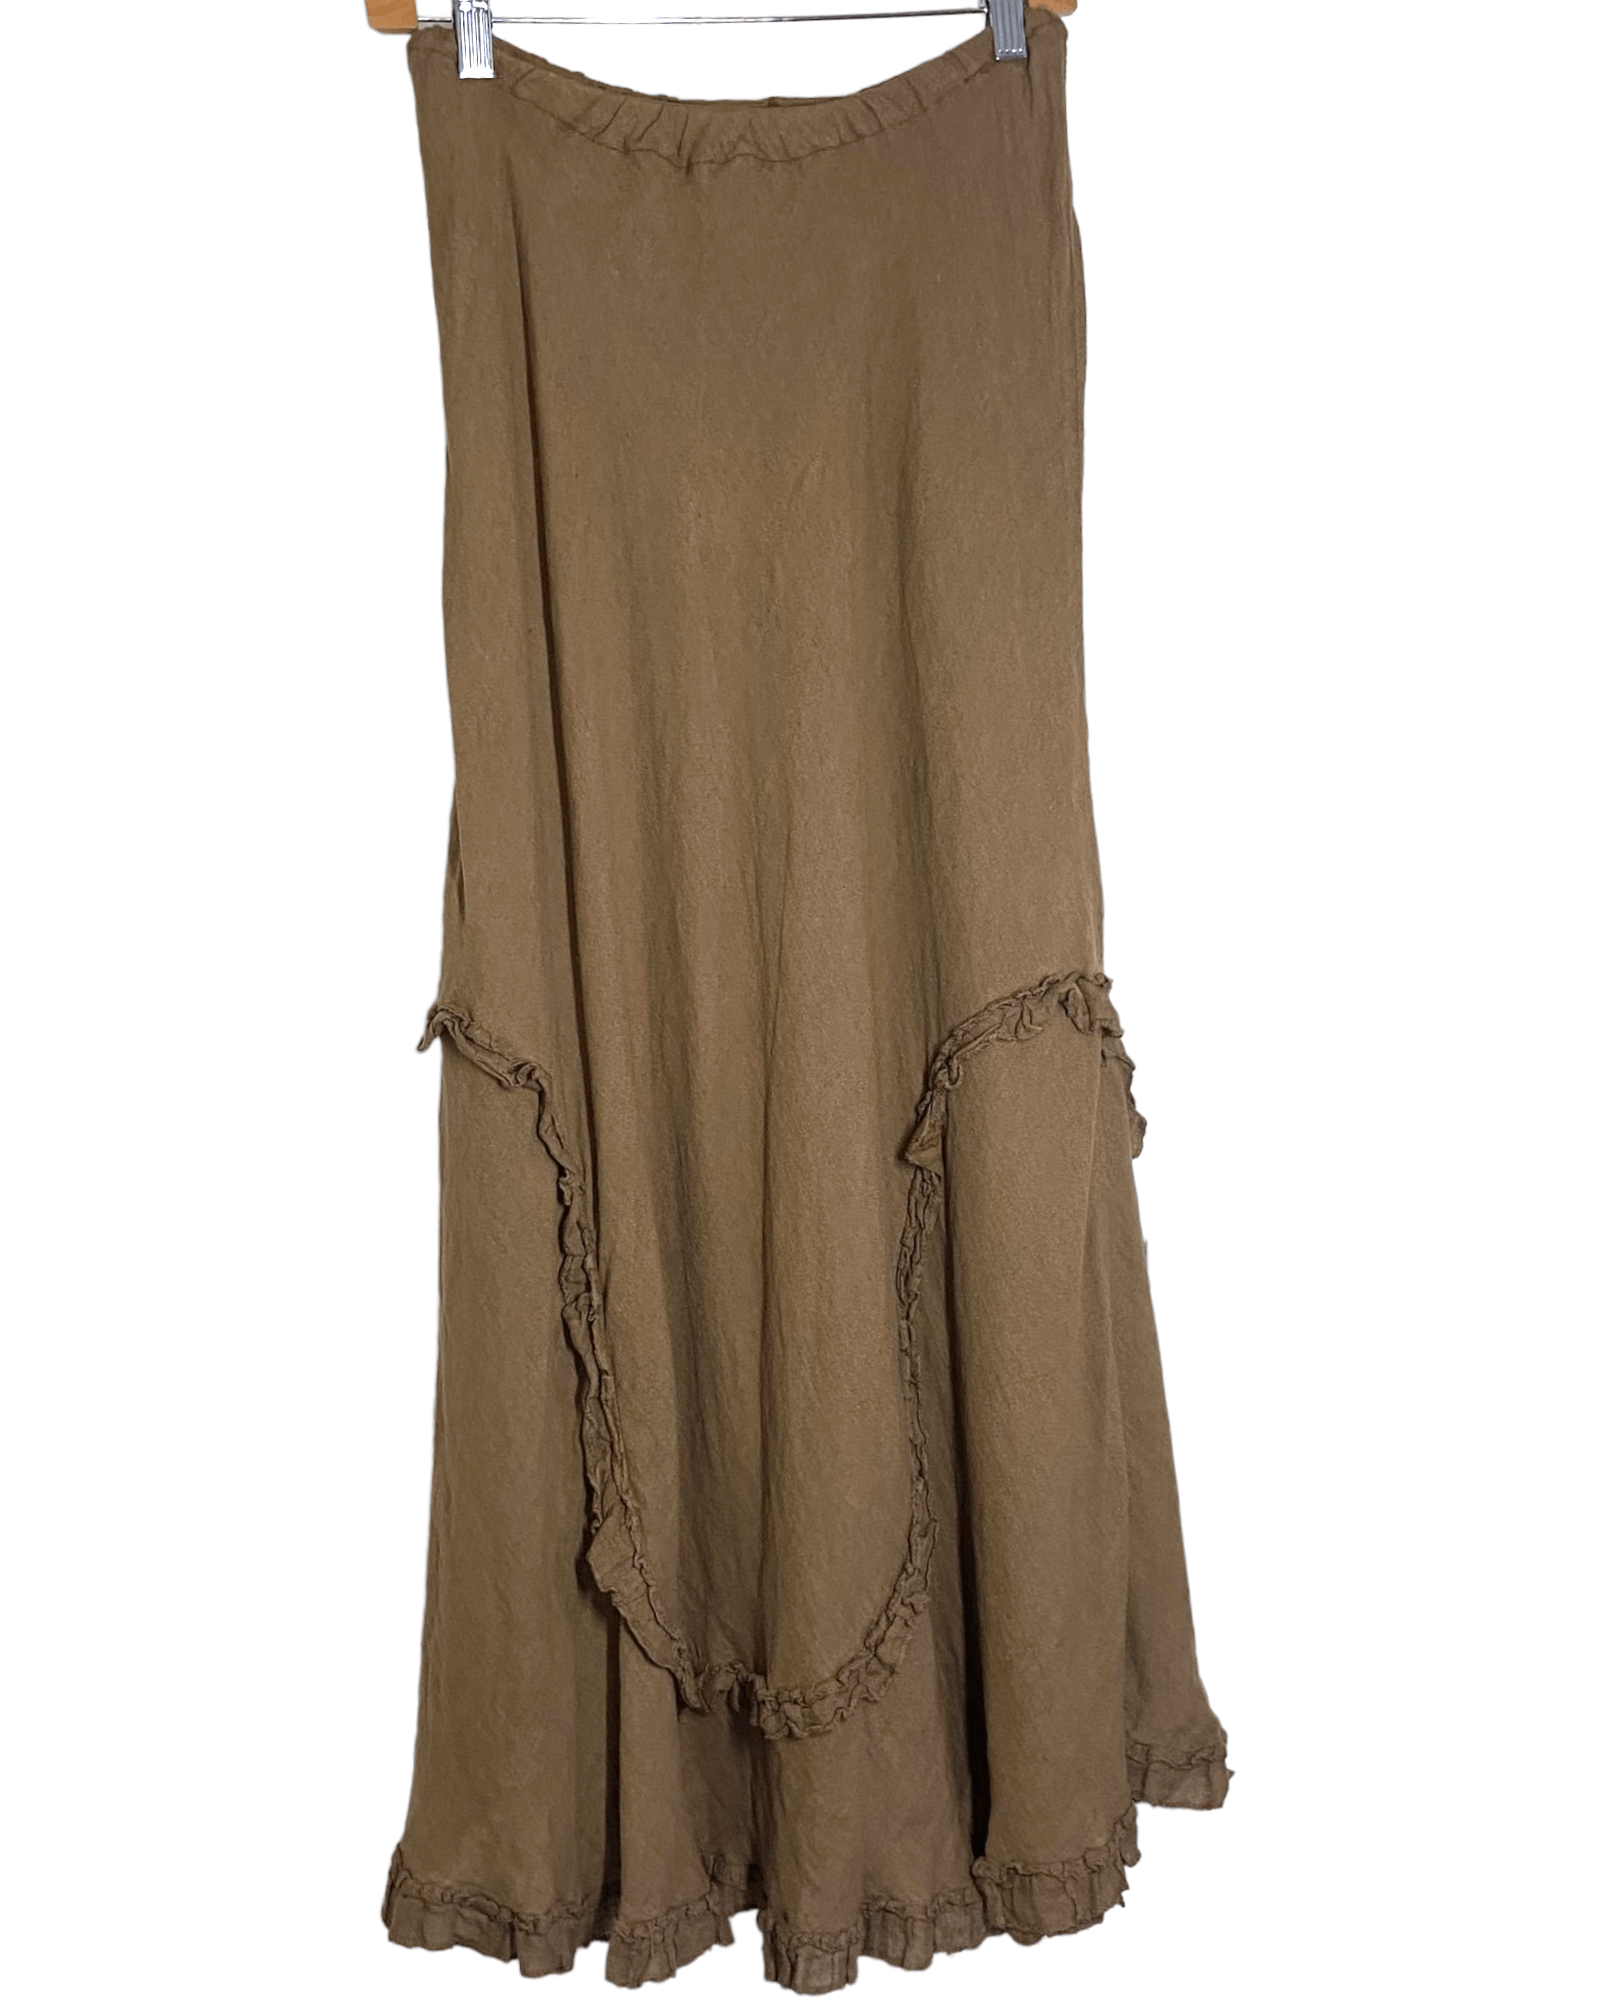 Warm Autumn CP SHADES linen ruffle maxi skirt